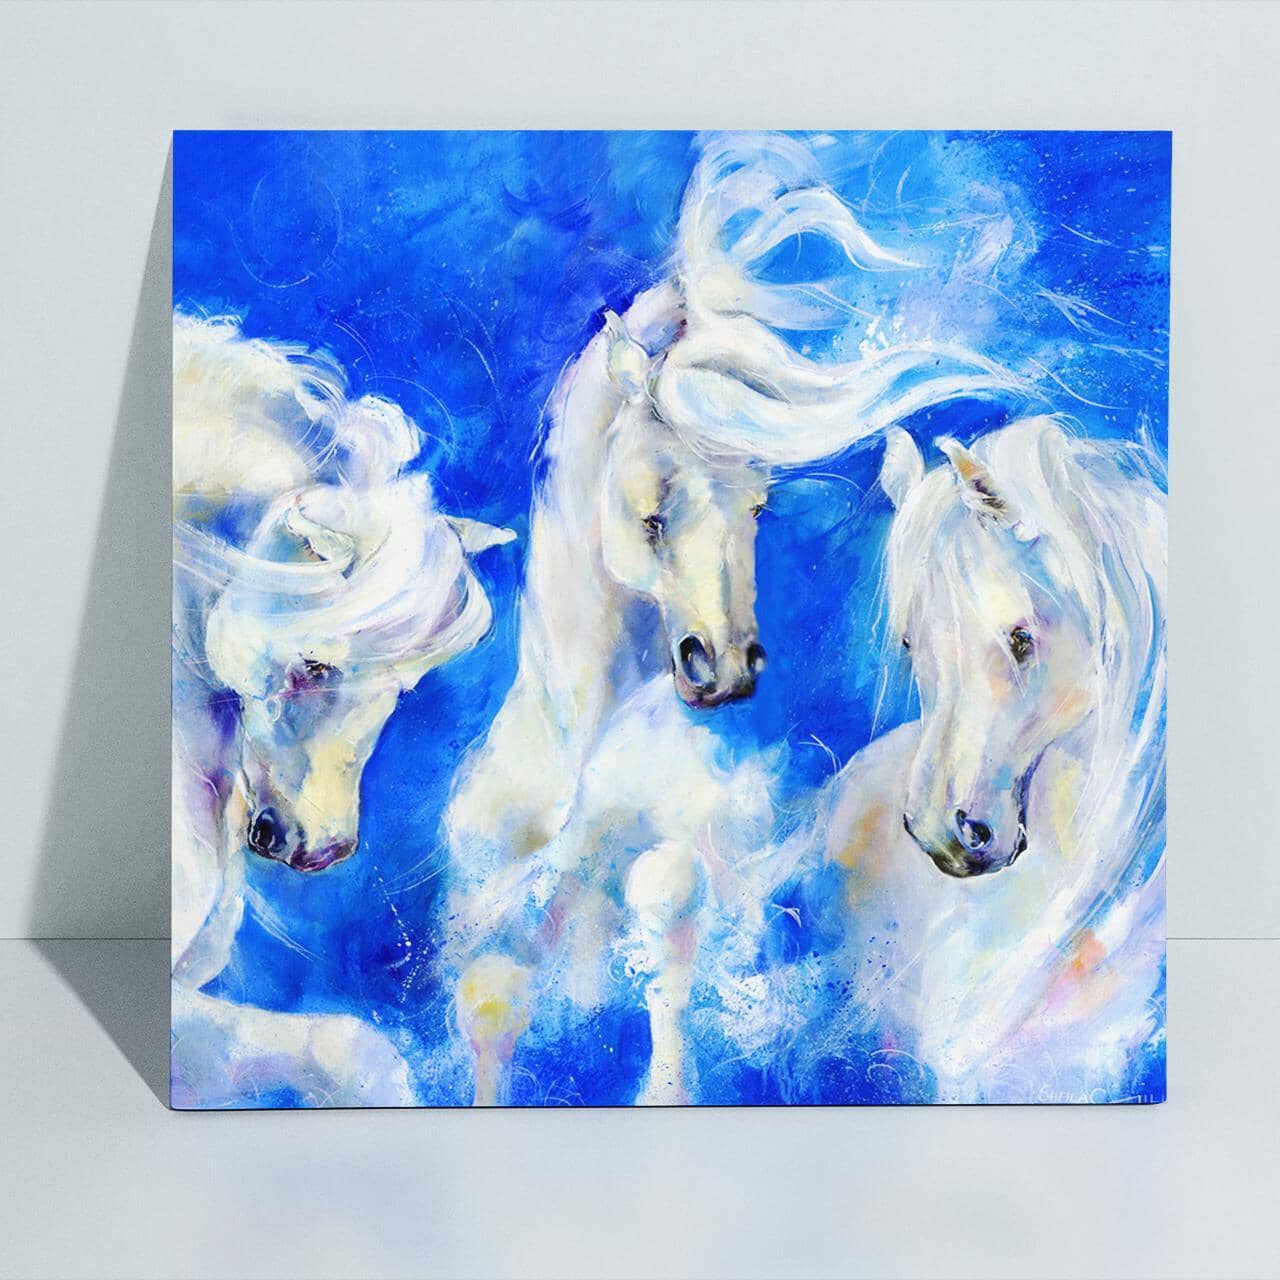 Three White Horses Canvas Art Print designed by artist Sheila Gill
